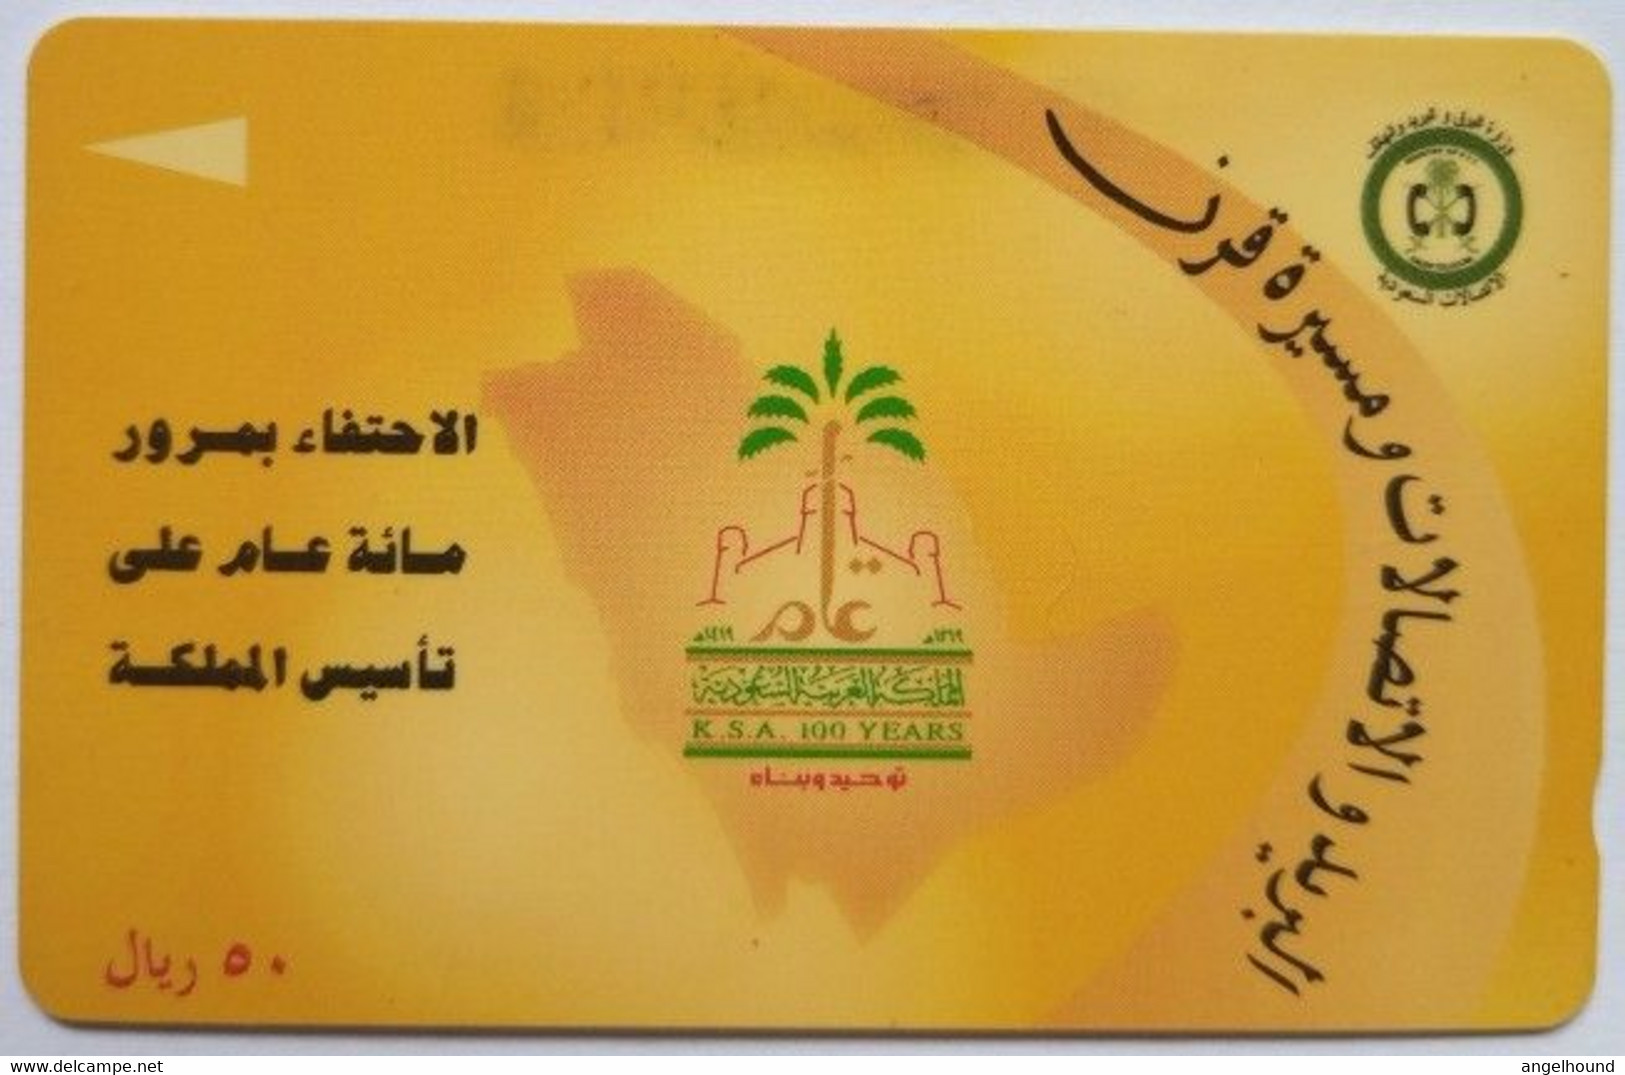 Saudi Arabia SAUDG 50 Riyals " Emblem 1919- 1419 " KSA 100 Years - Saudi Arabia